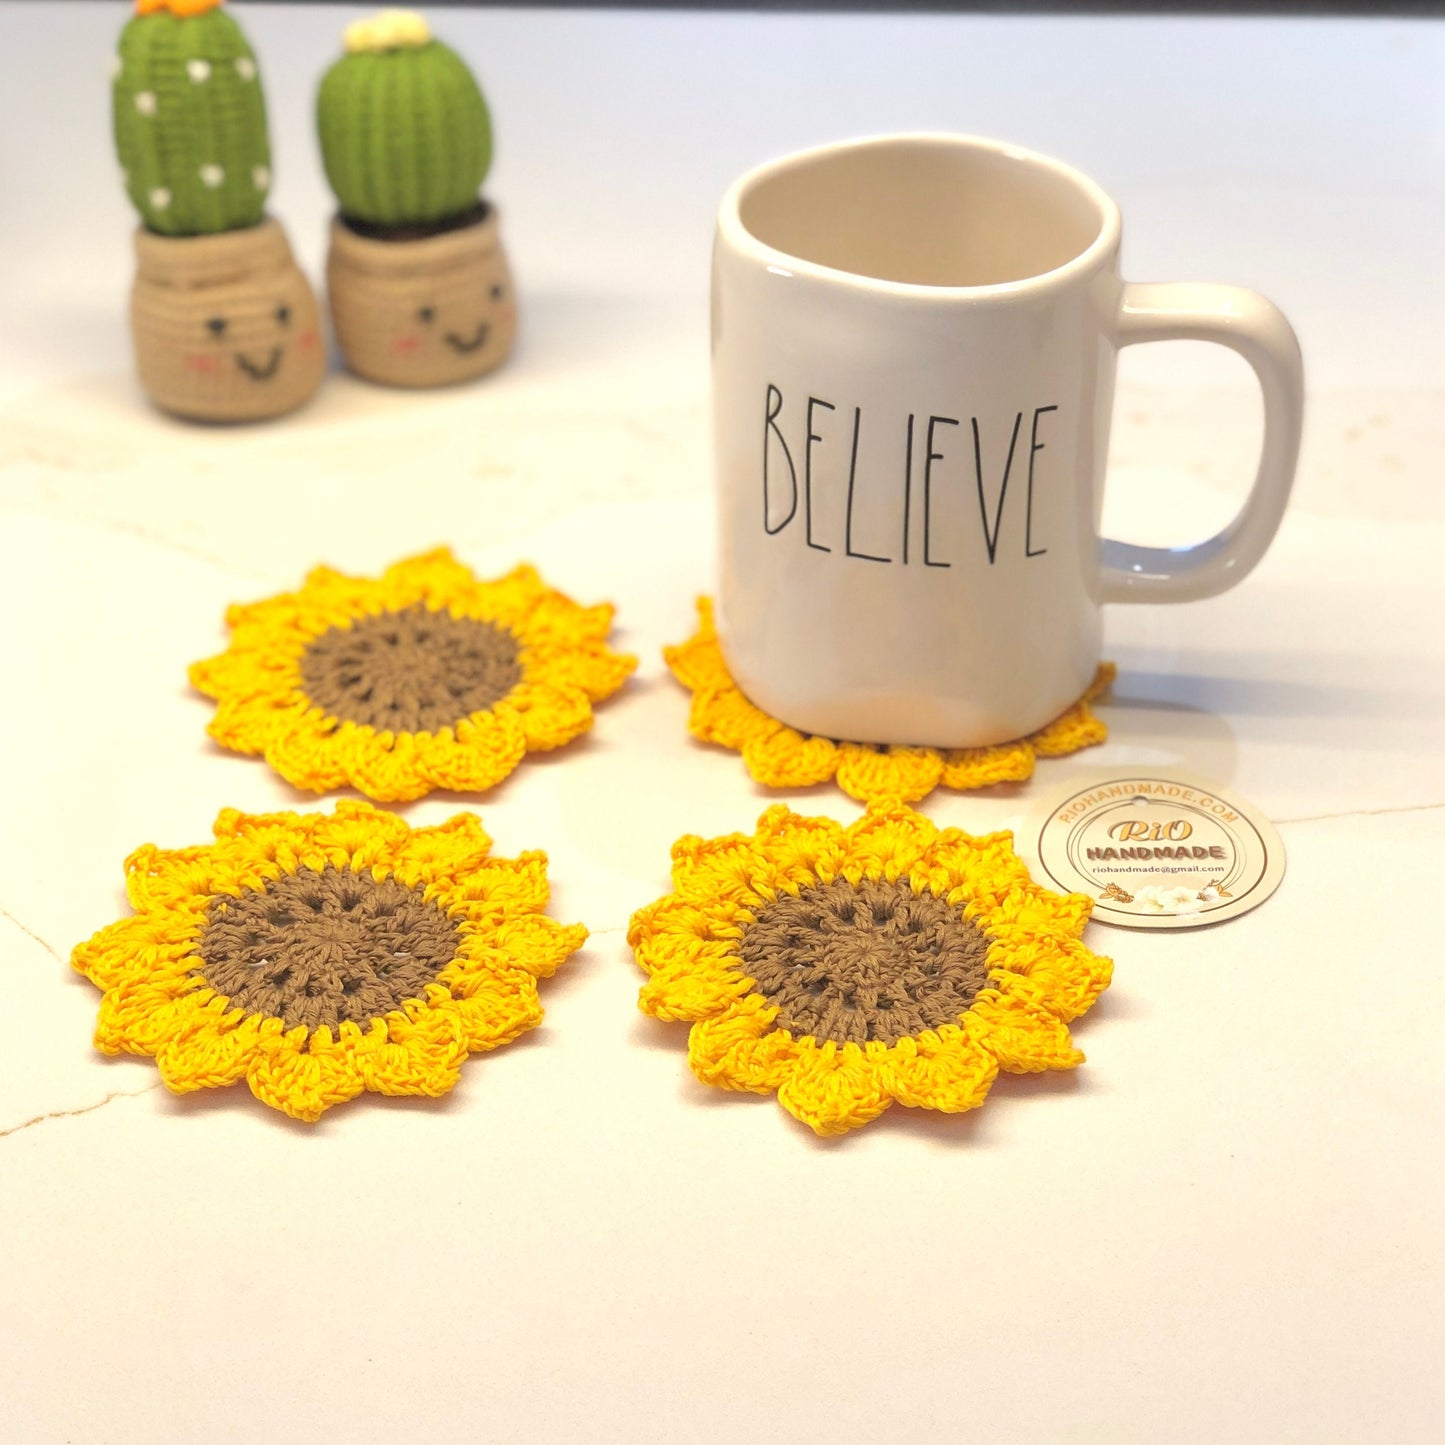 Handmade Crochet Amigurumi Coaster, Sunflower Coaster, Set of 4 Coasters,  Housewarming Gift, Home Decor, Crochet